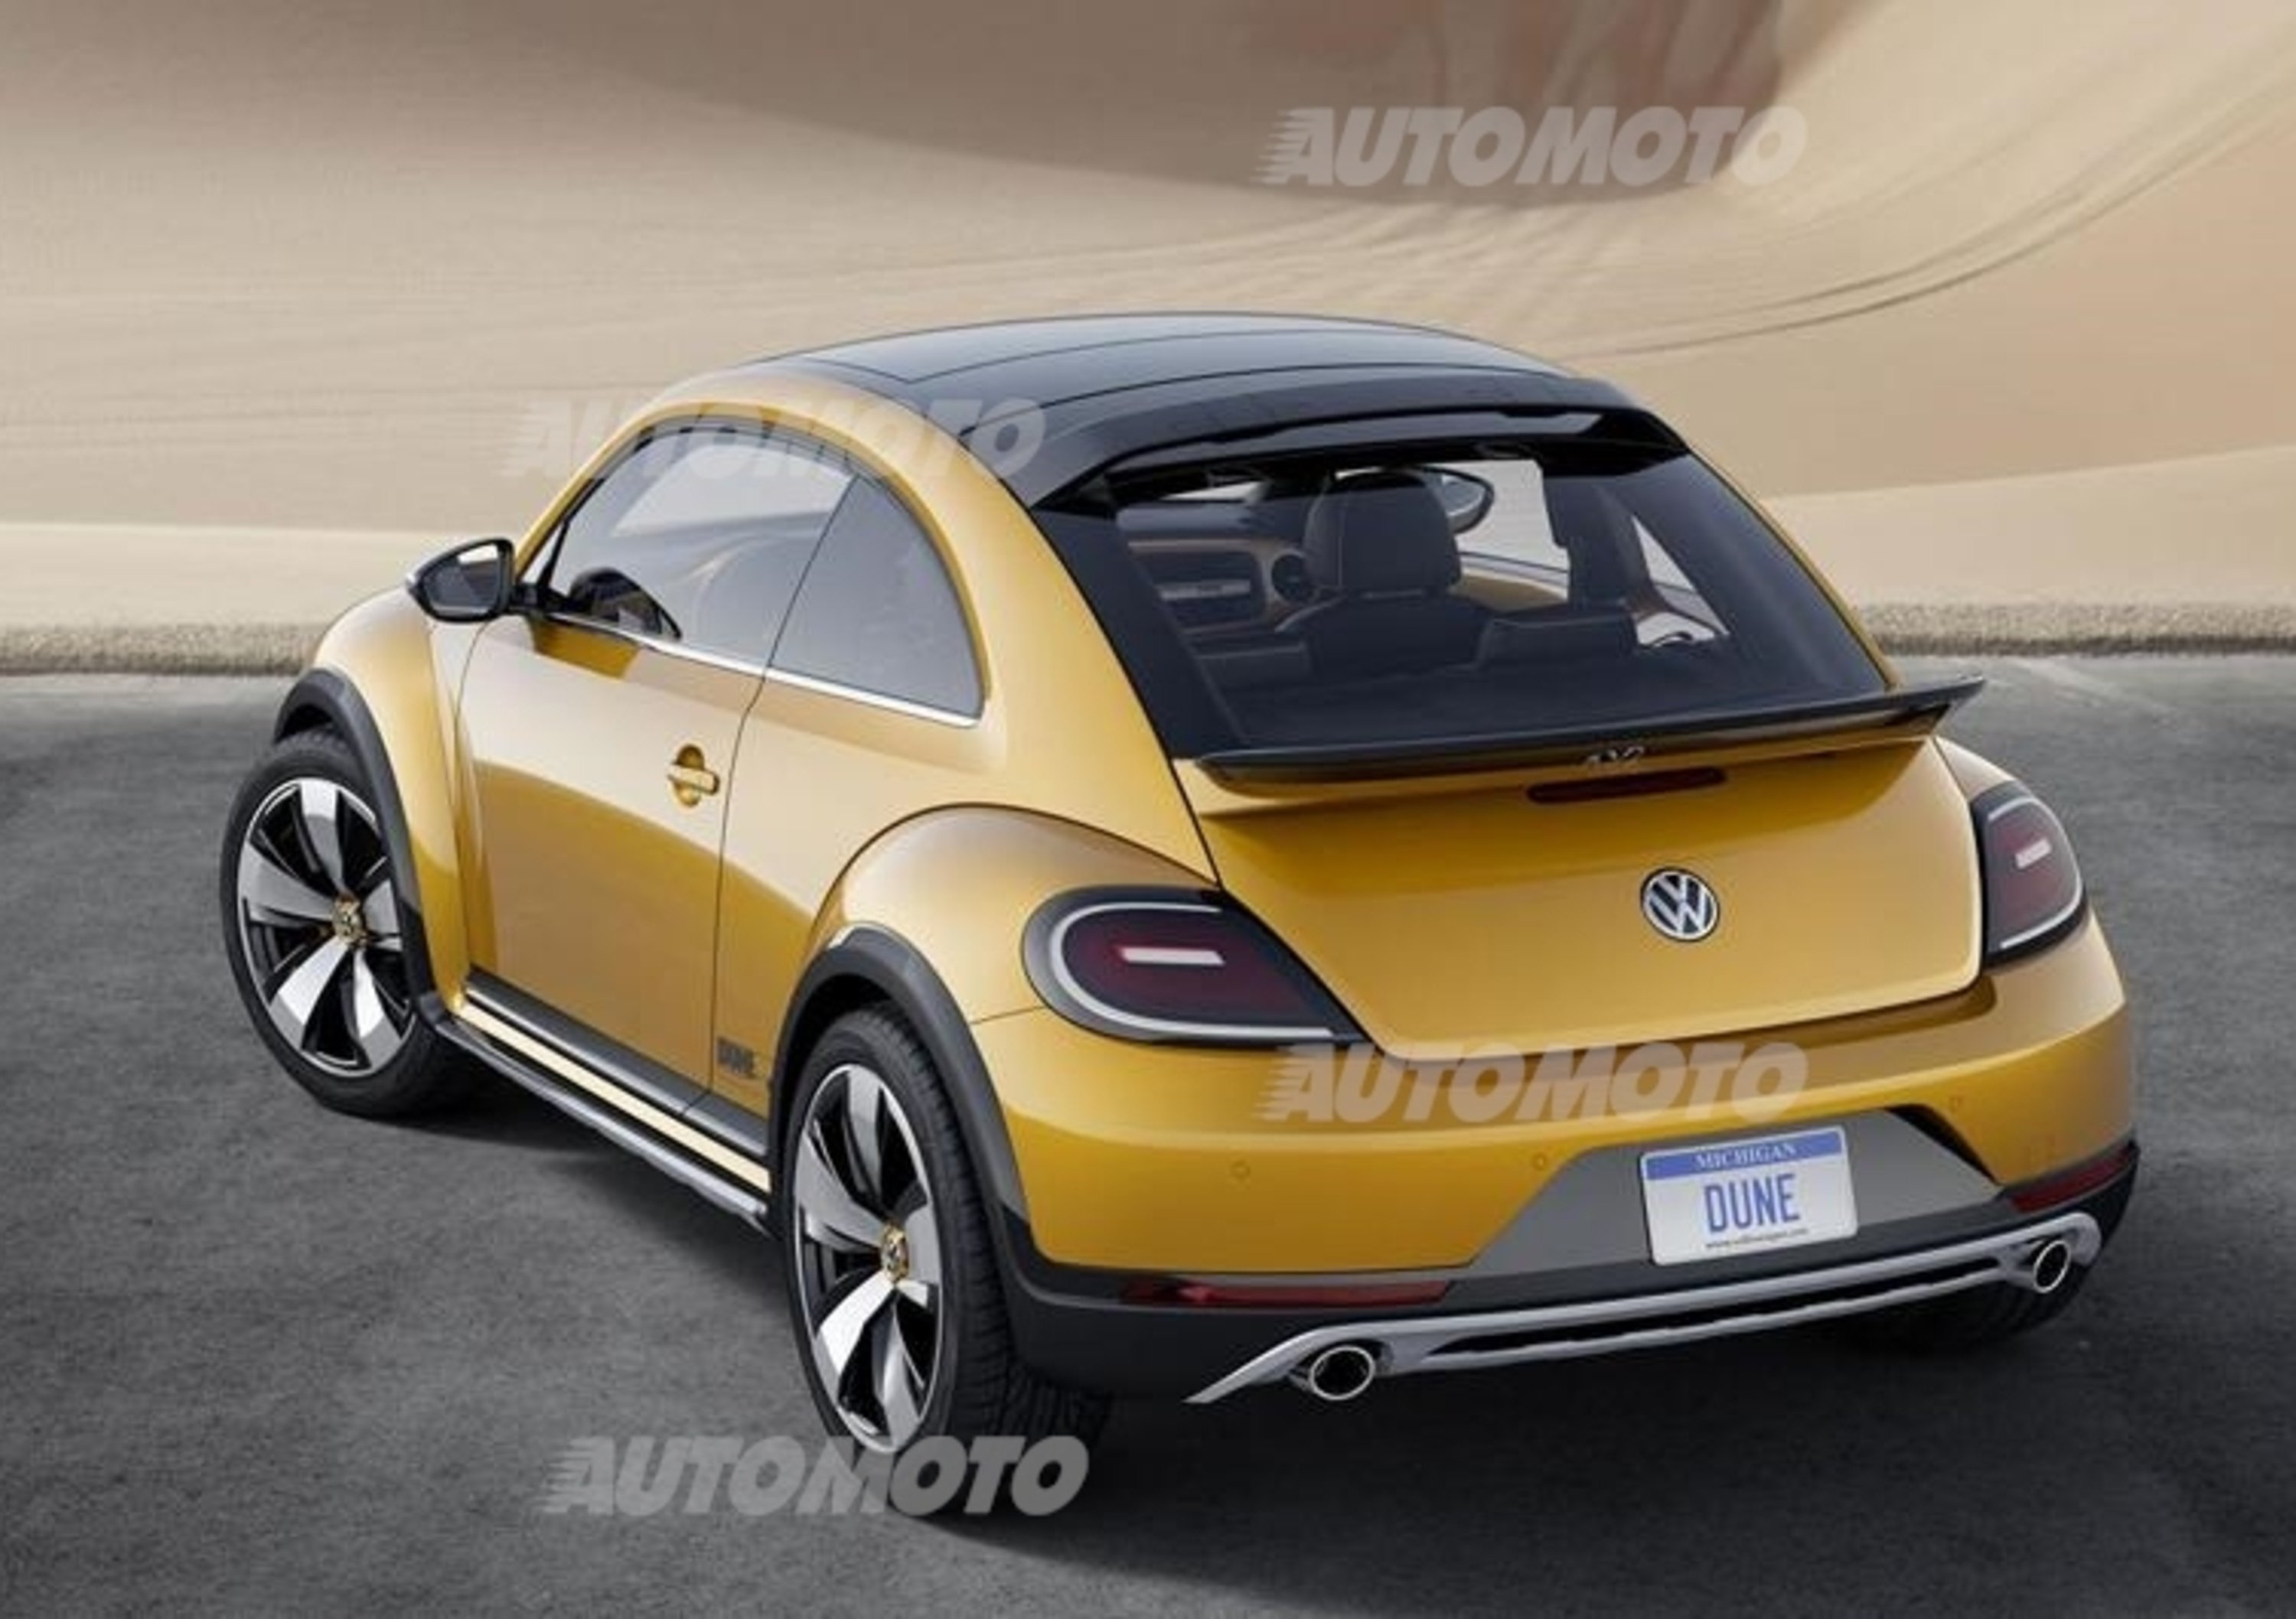 Nuova Volkswagen Beetle Dune concept: tutte le immagini